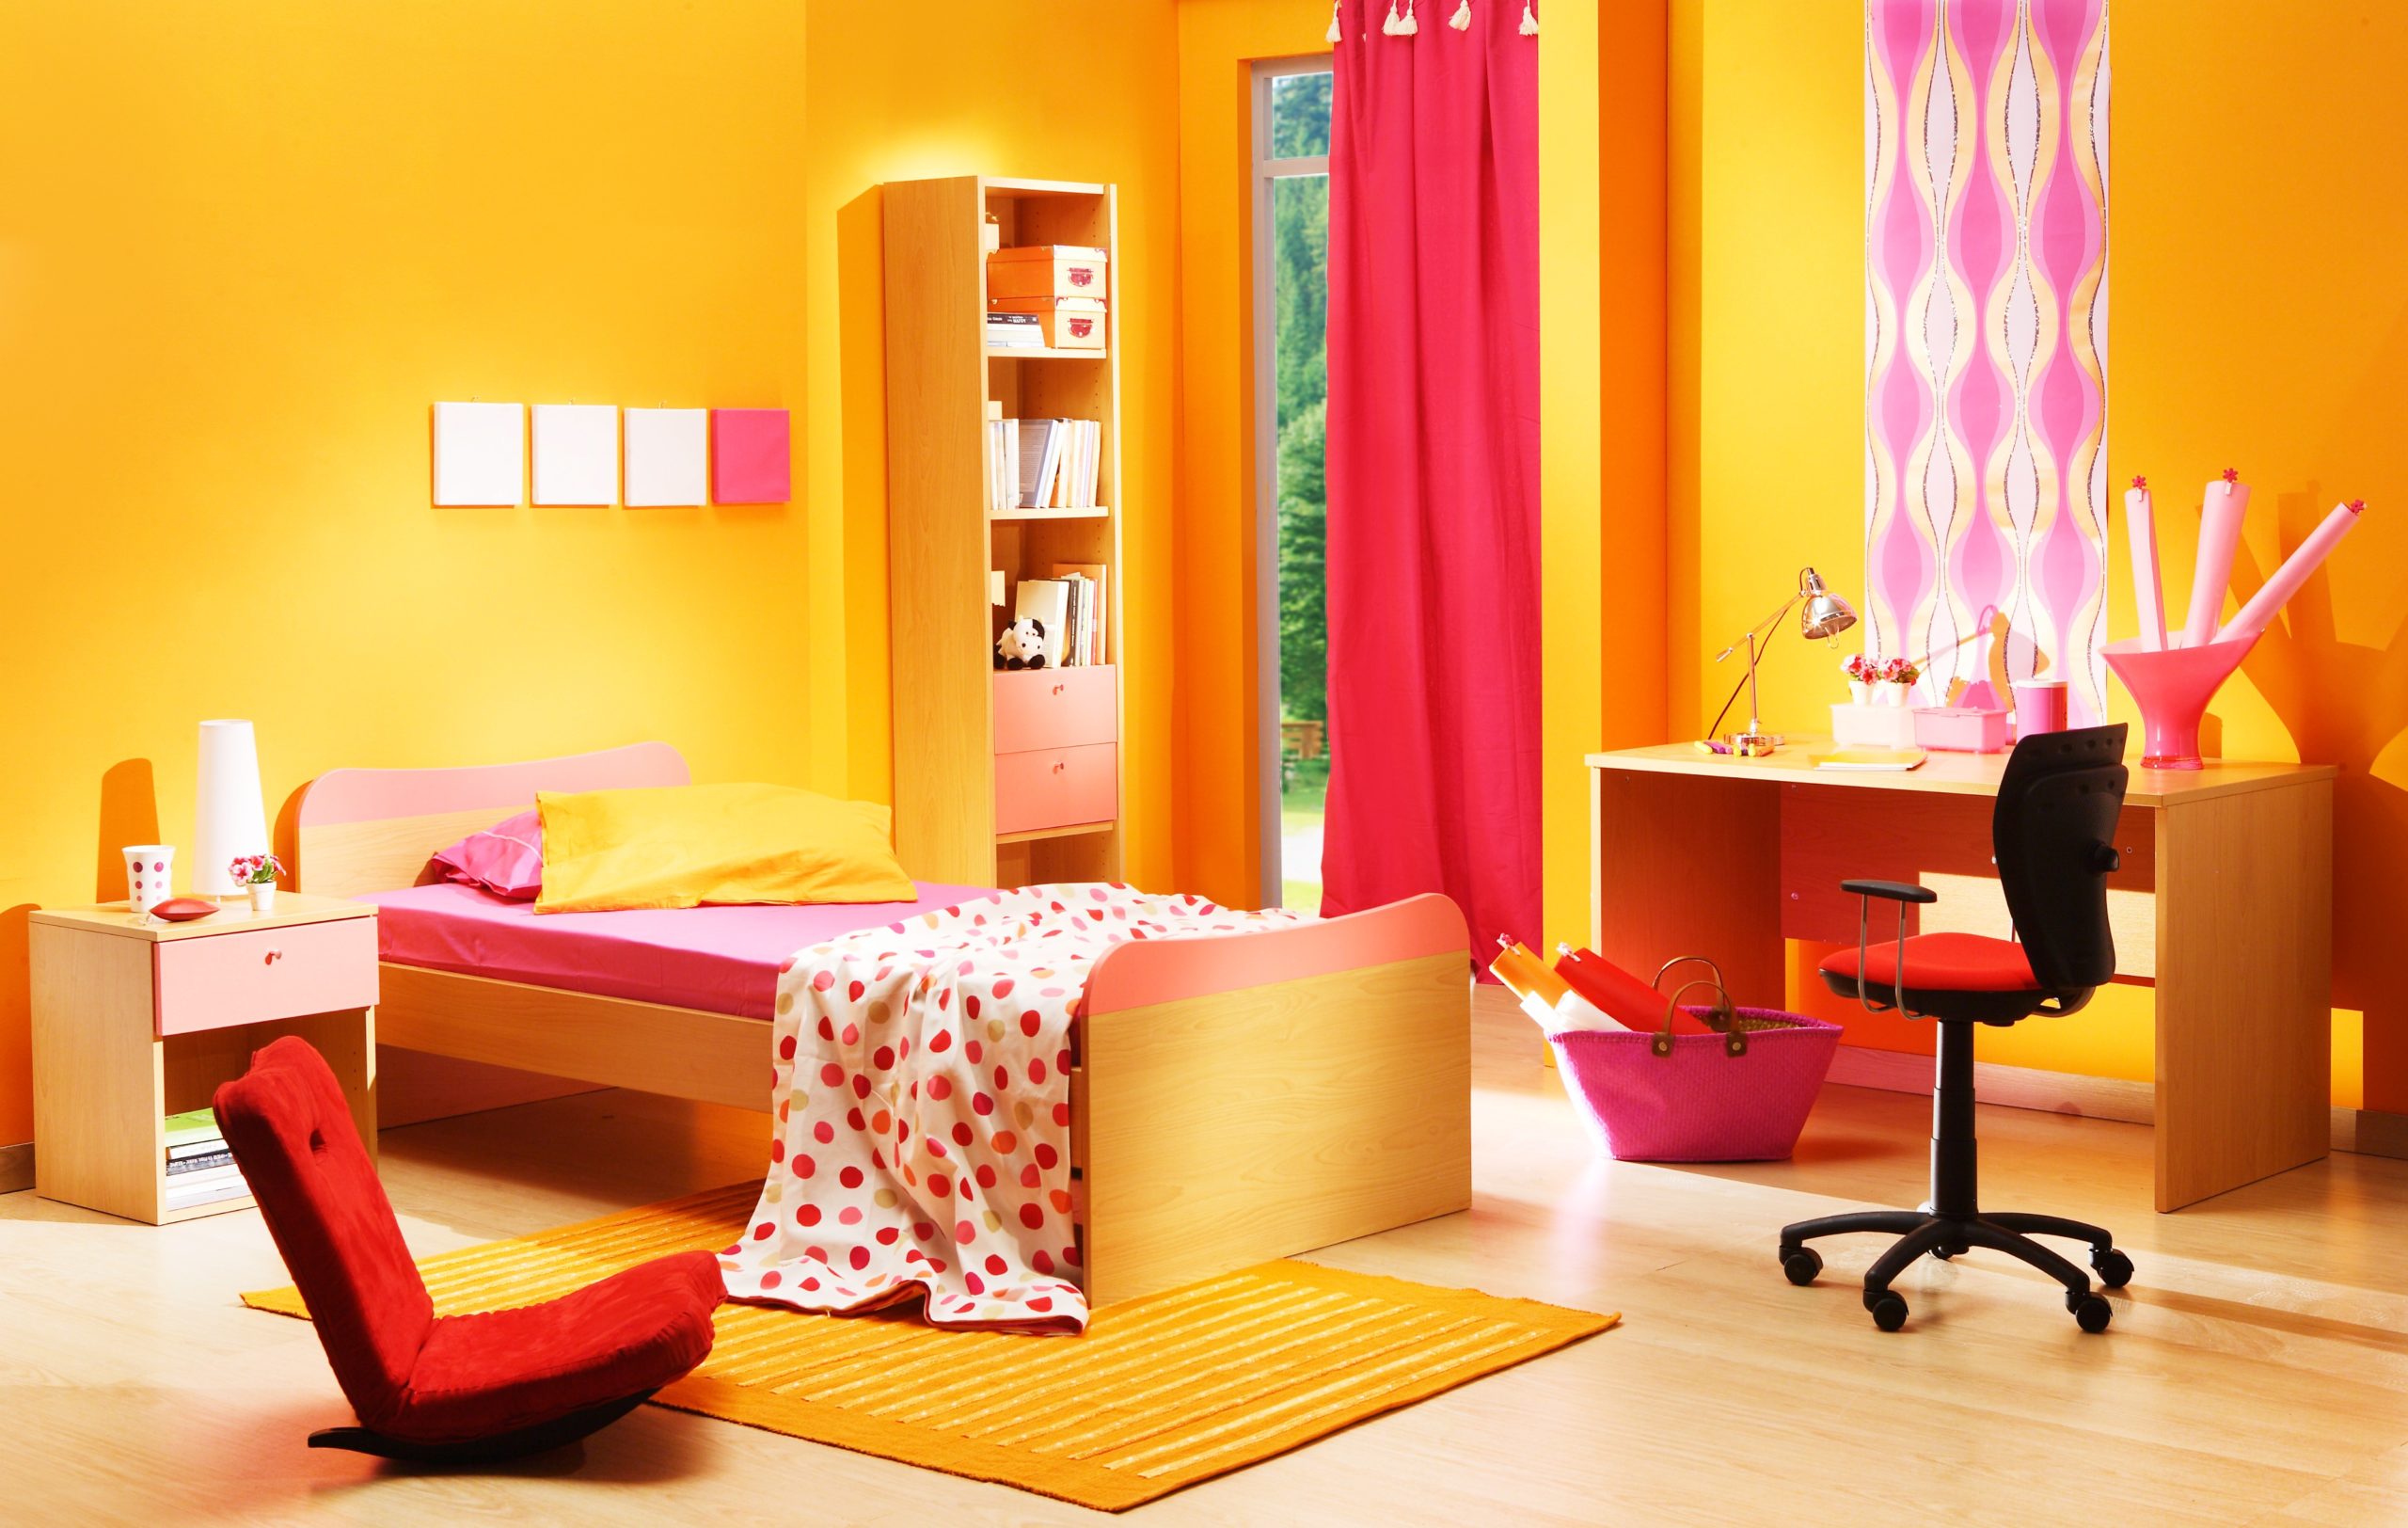 <img src="orange.jpg" alt="orange and pink bold bedroom decor"/> 